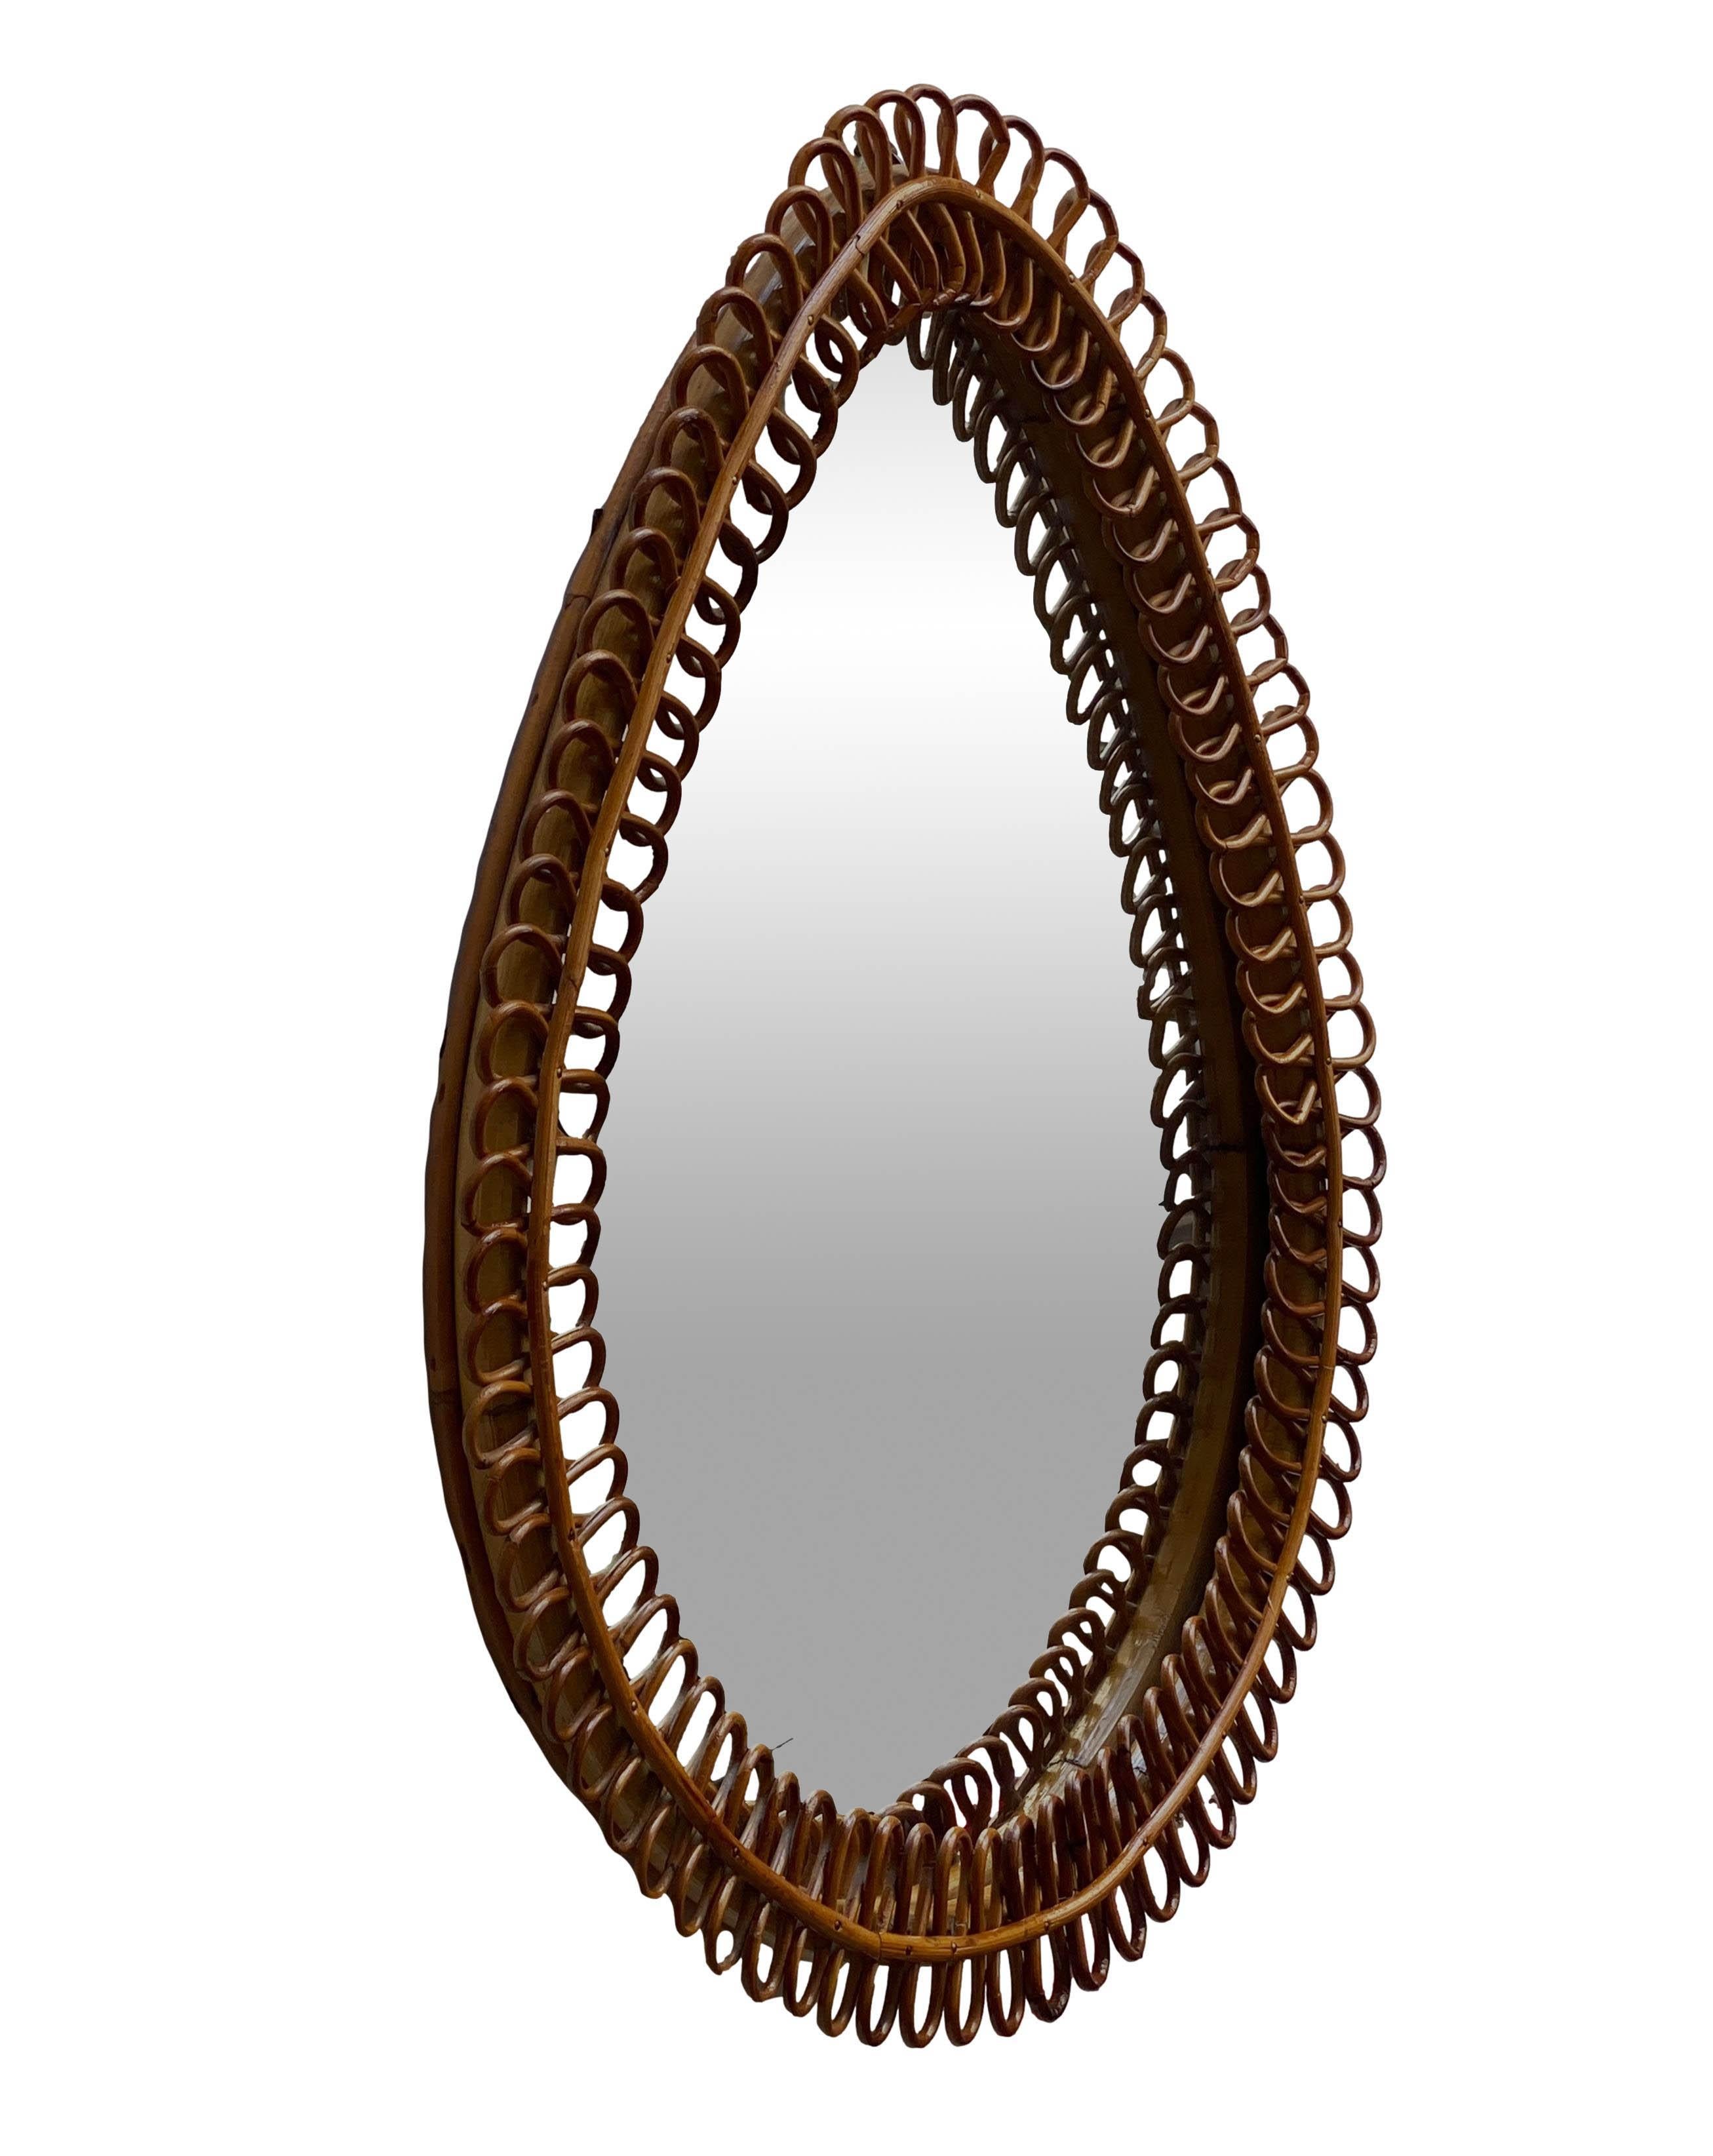 Large drop-shaped rattan mirror by Franco Albini for Bonacina Italia 1960.